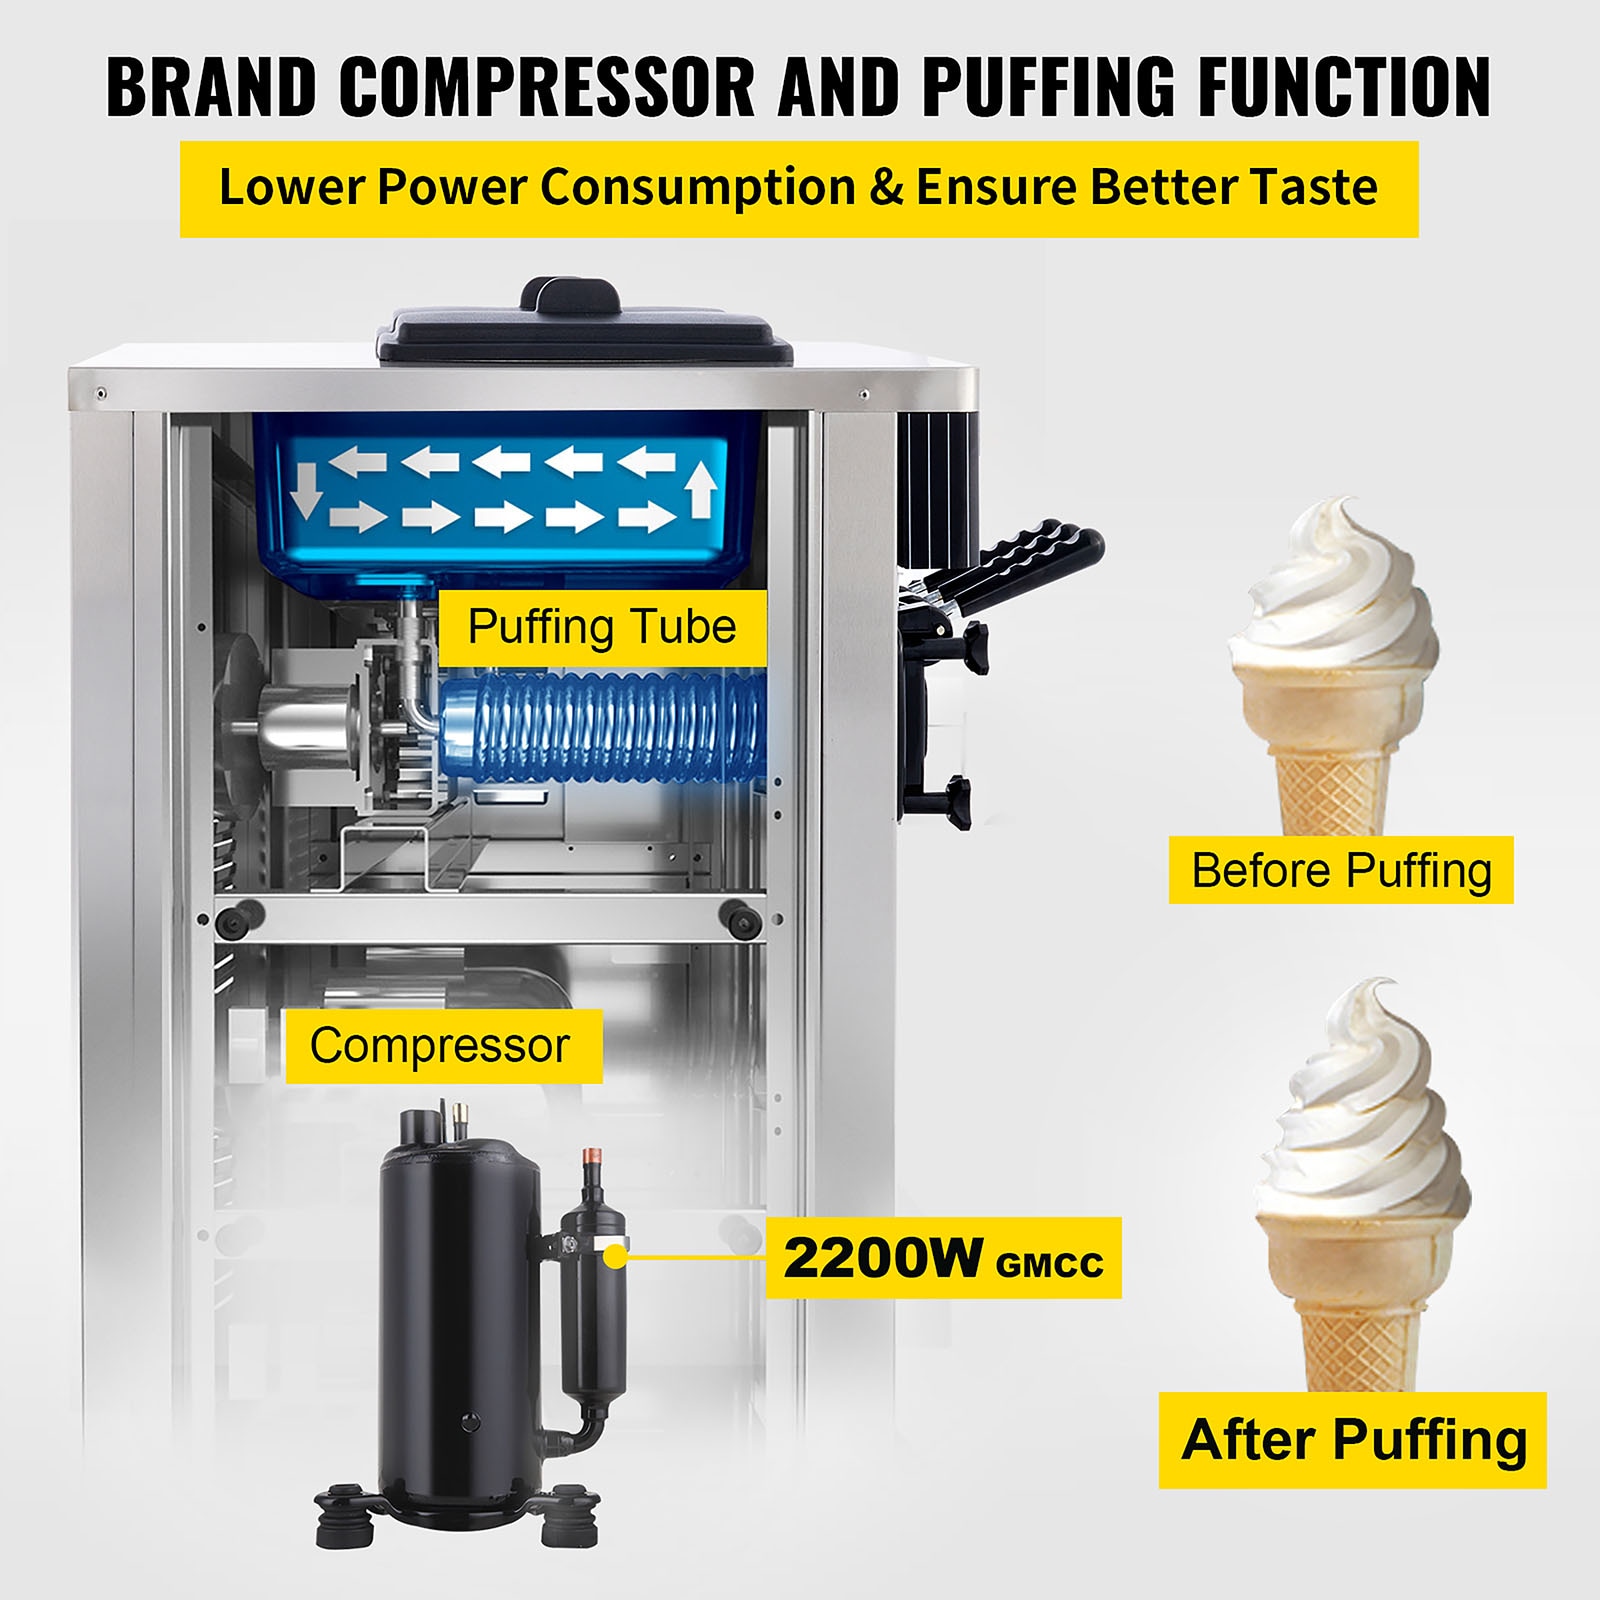 VEVOR Automatic Ice Cream Maker with Built-in Compressor, 2 Quart